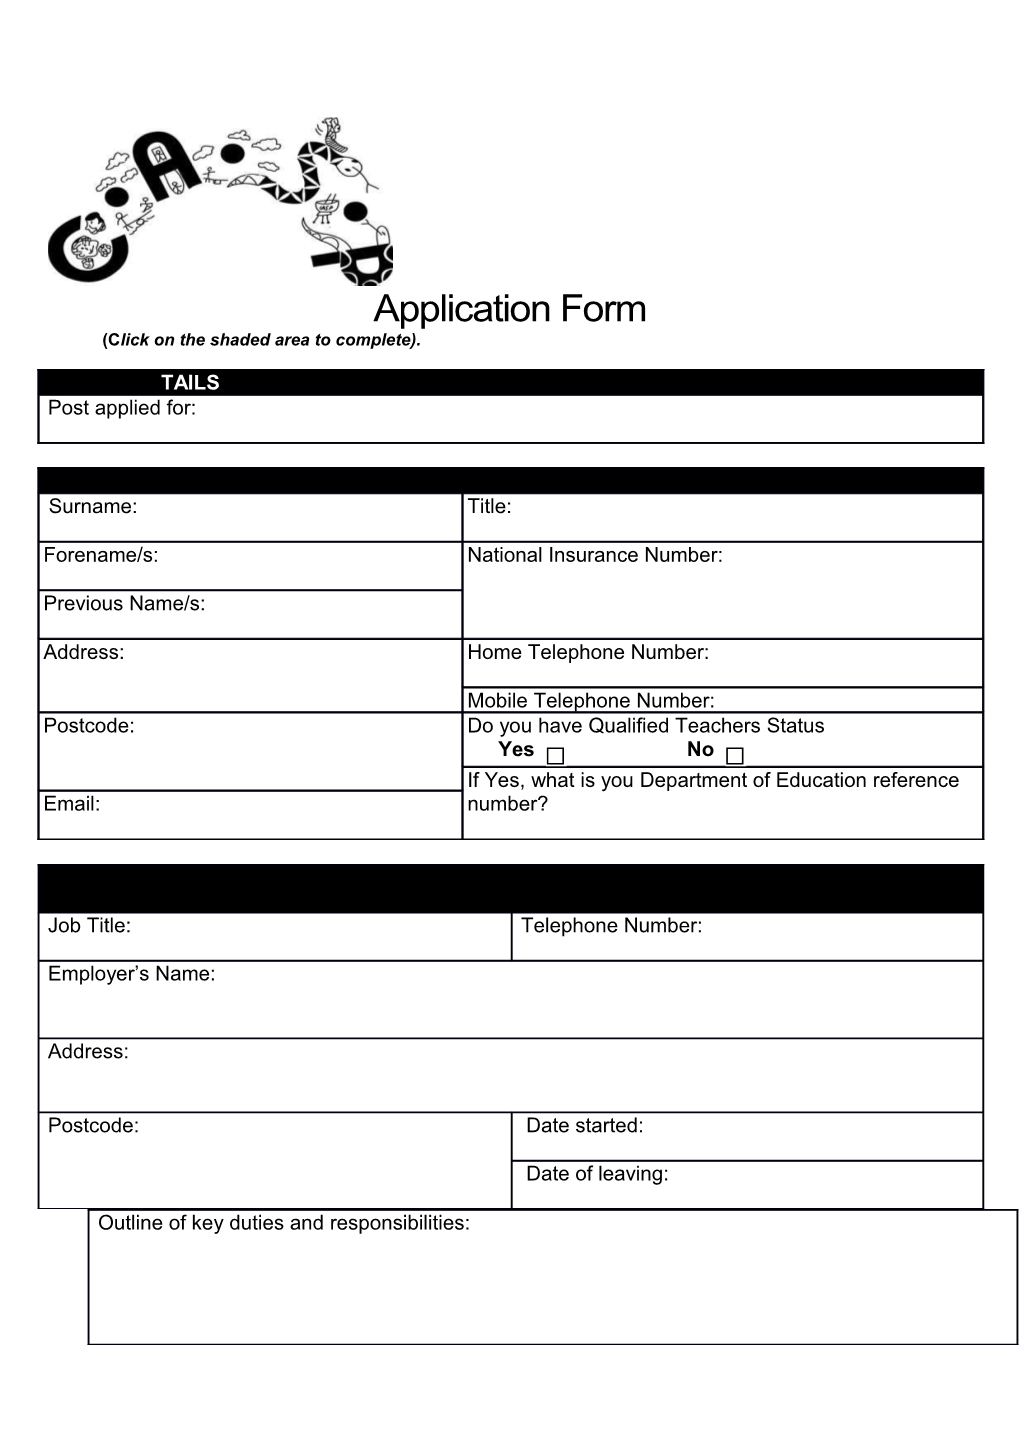 Sample Job Application Form